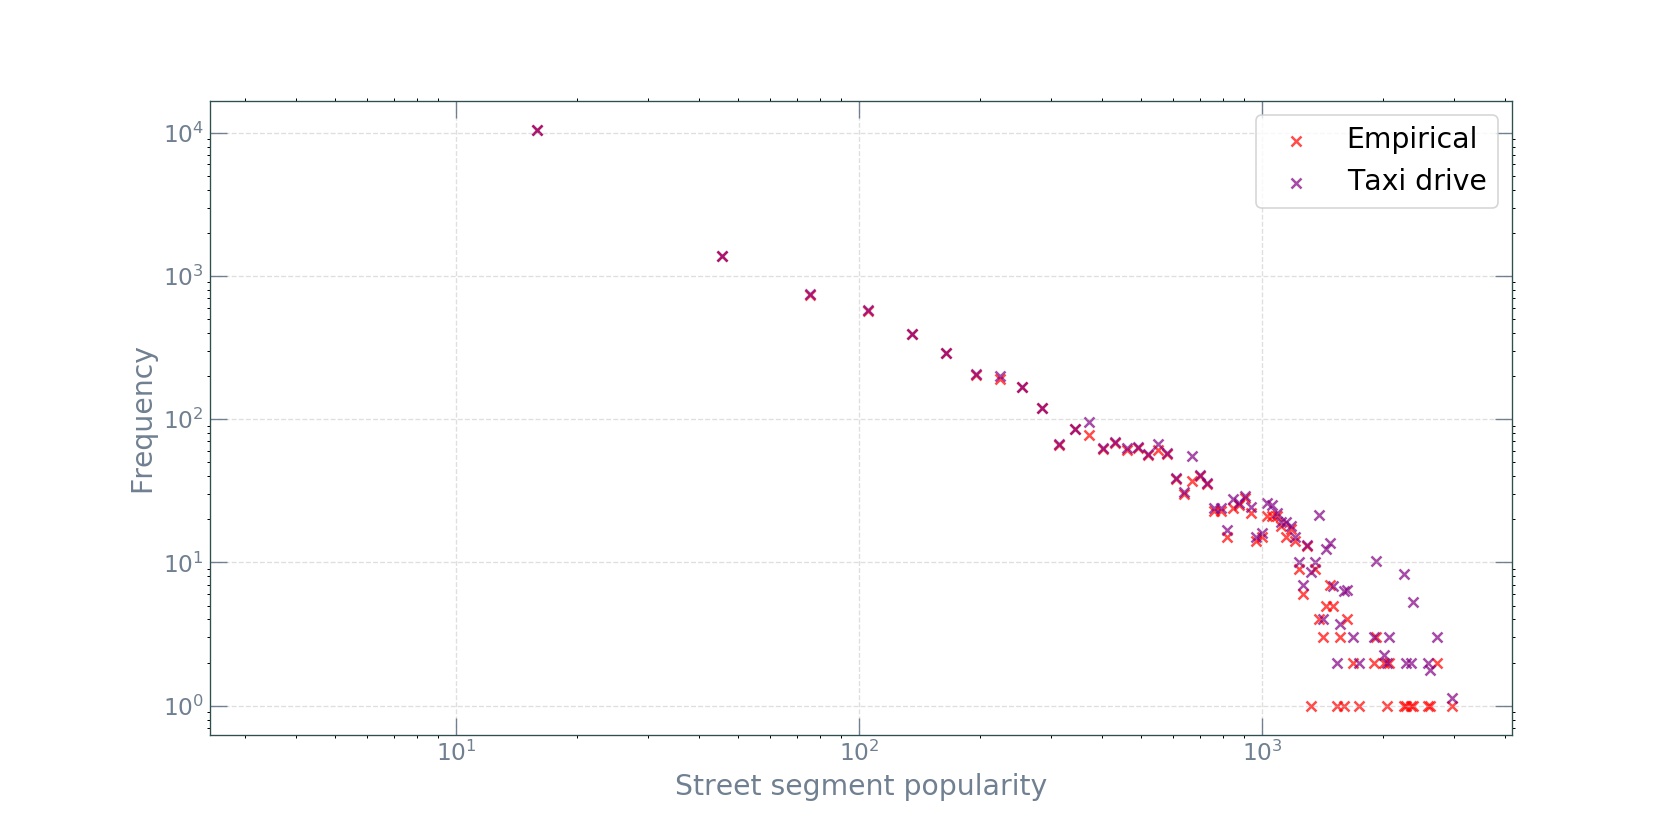 Yerevan segment popularity distribution